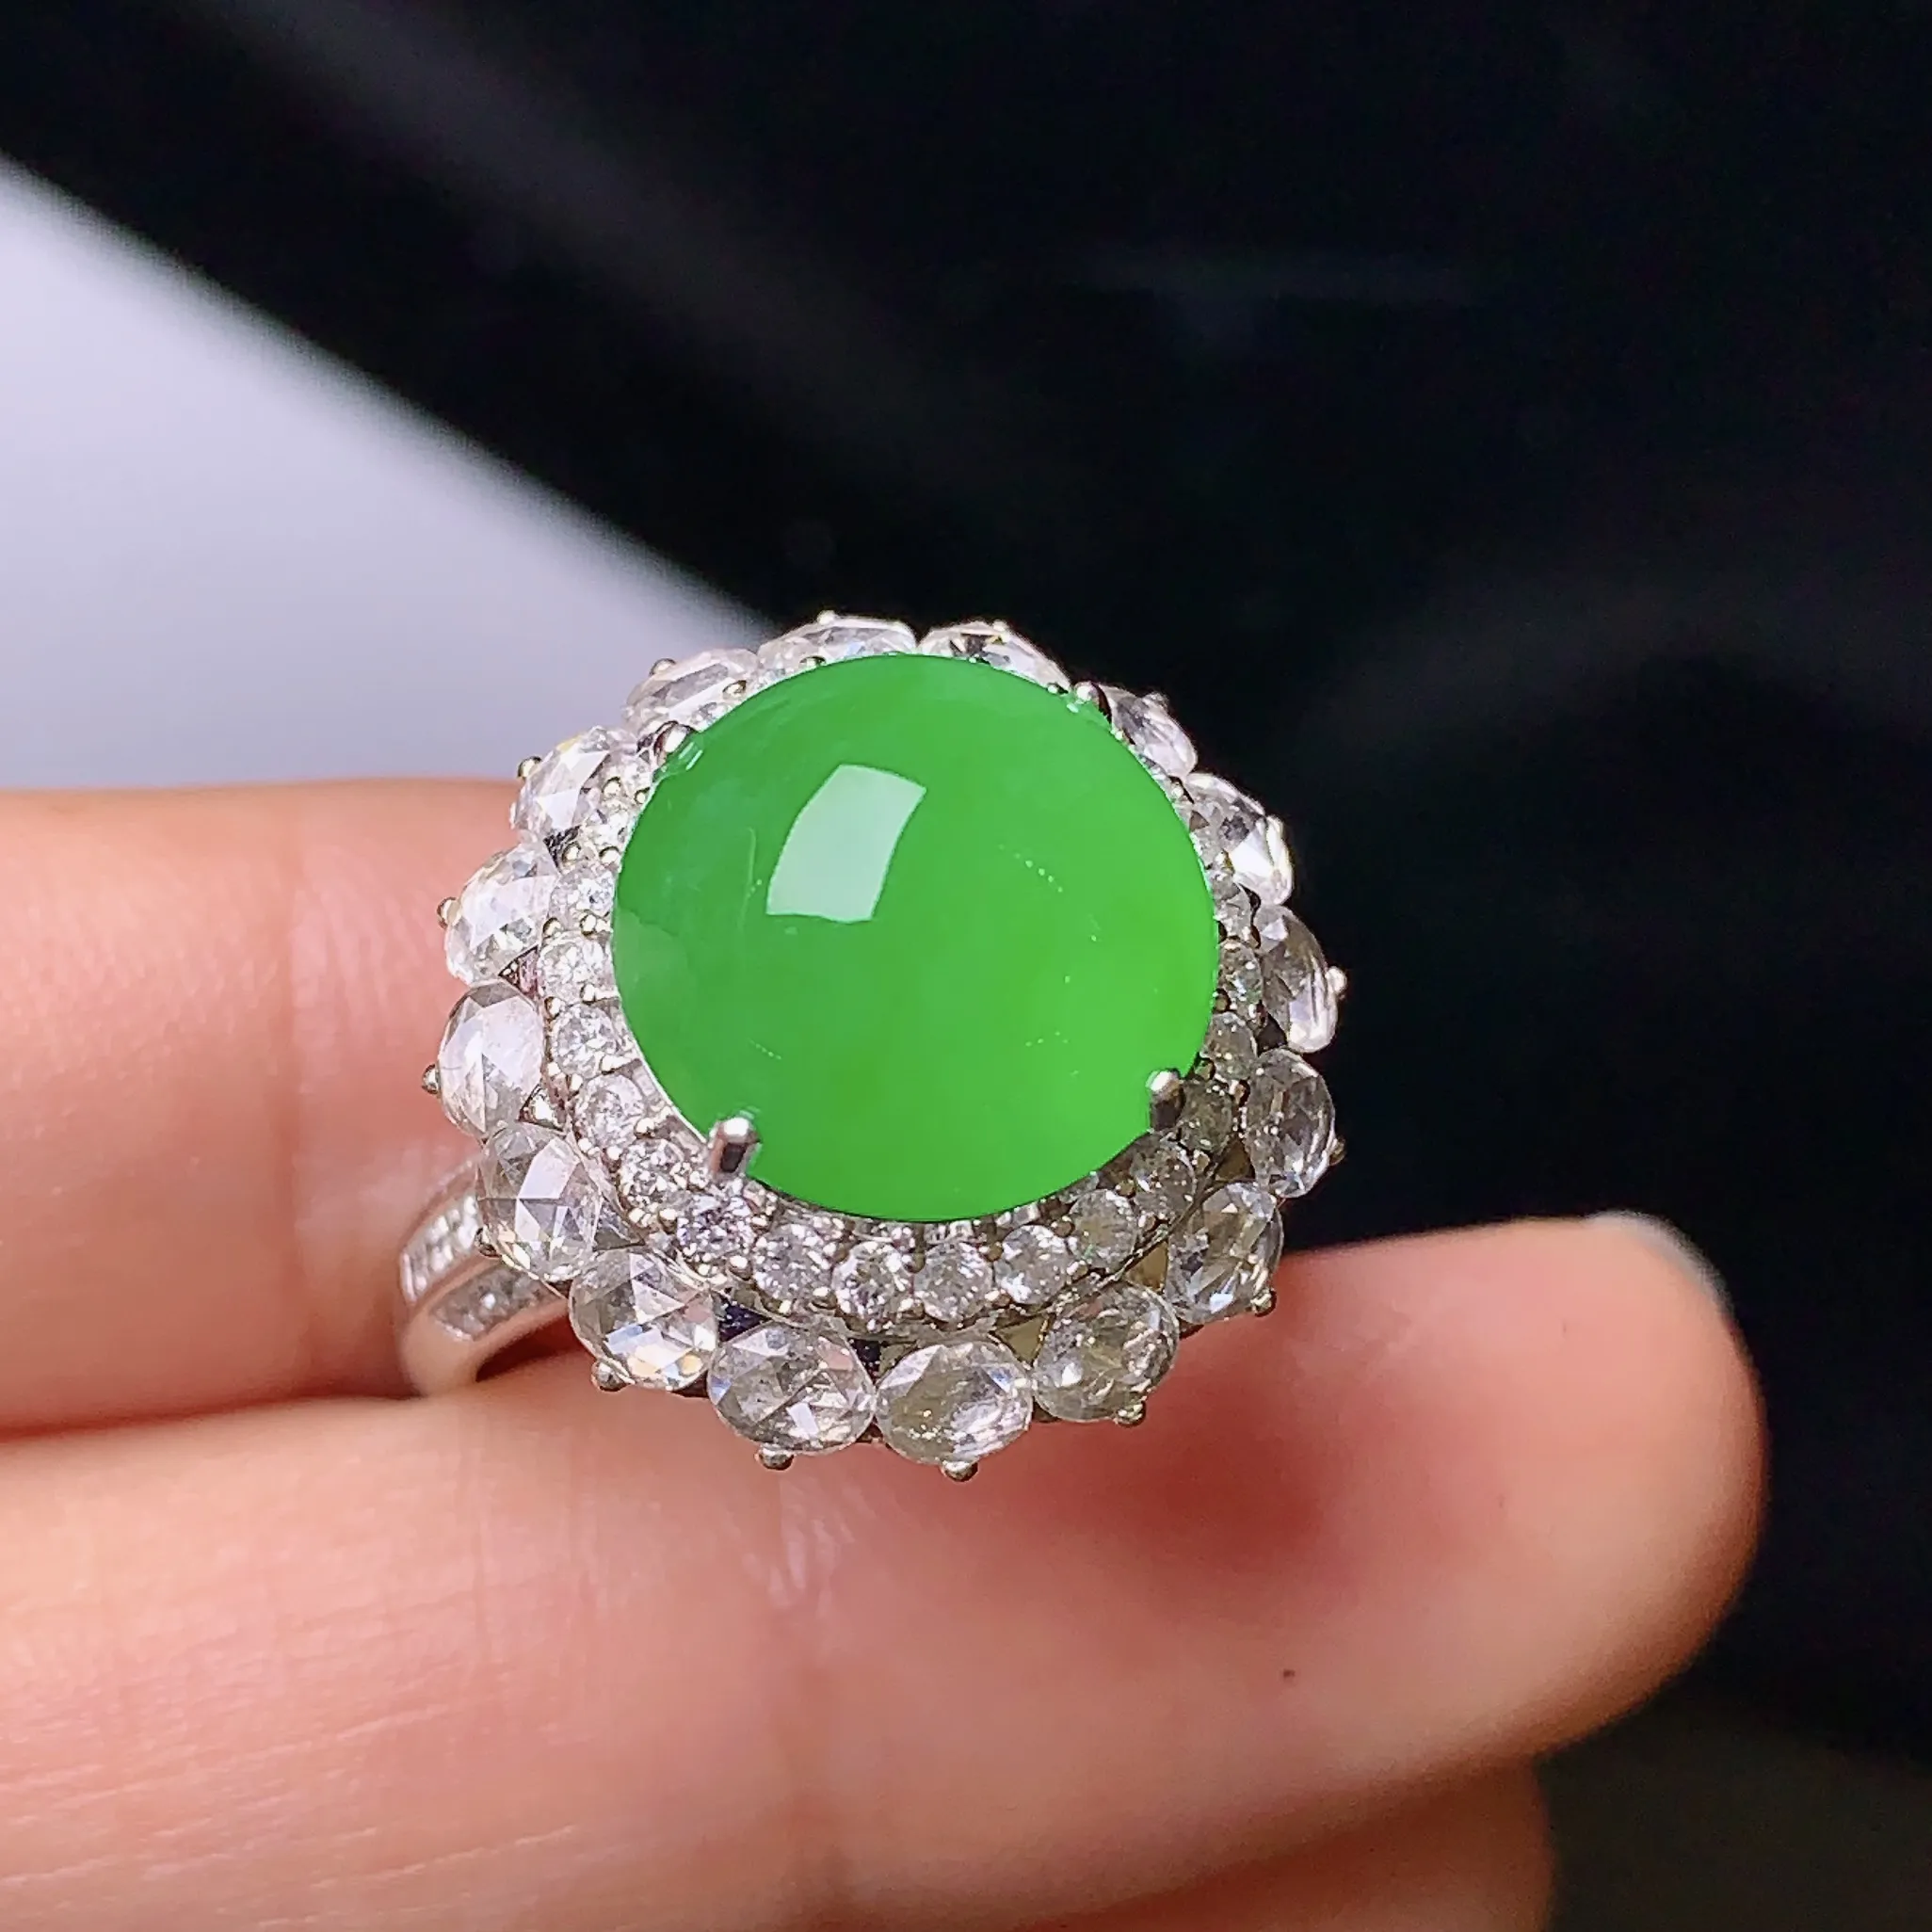 18k金钻镶嵌满绿蛋面戒指 玉质细腻 色泽艳丽 款式新颖时尚唯美 圈口14 整体尺寸18.3*14.5